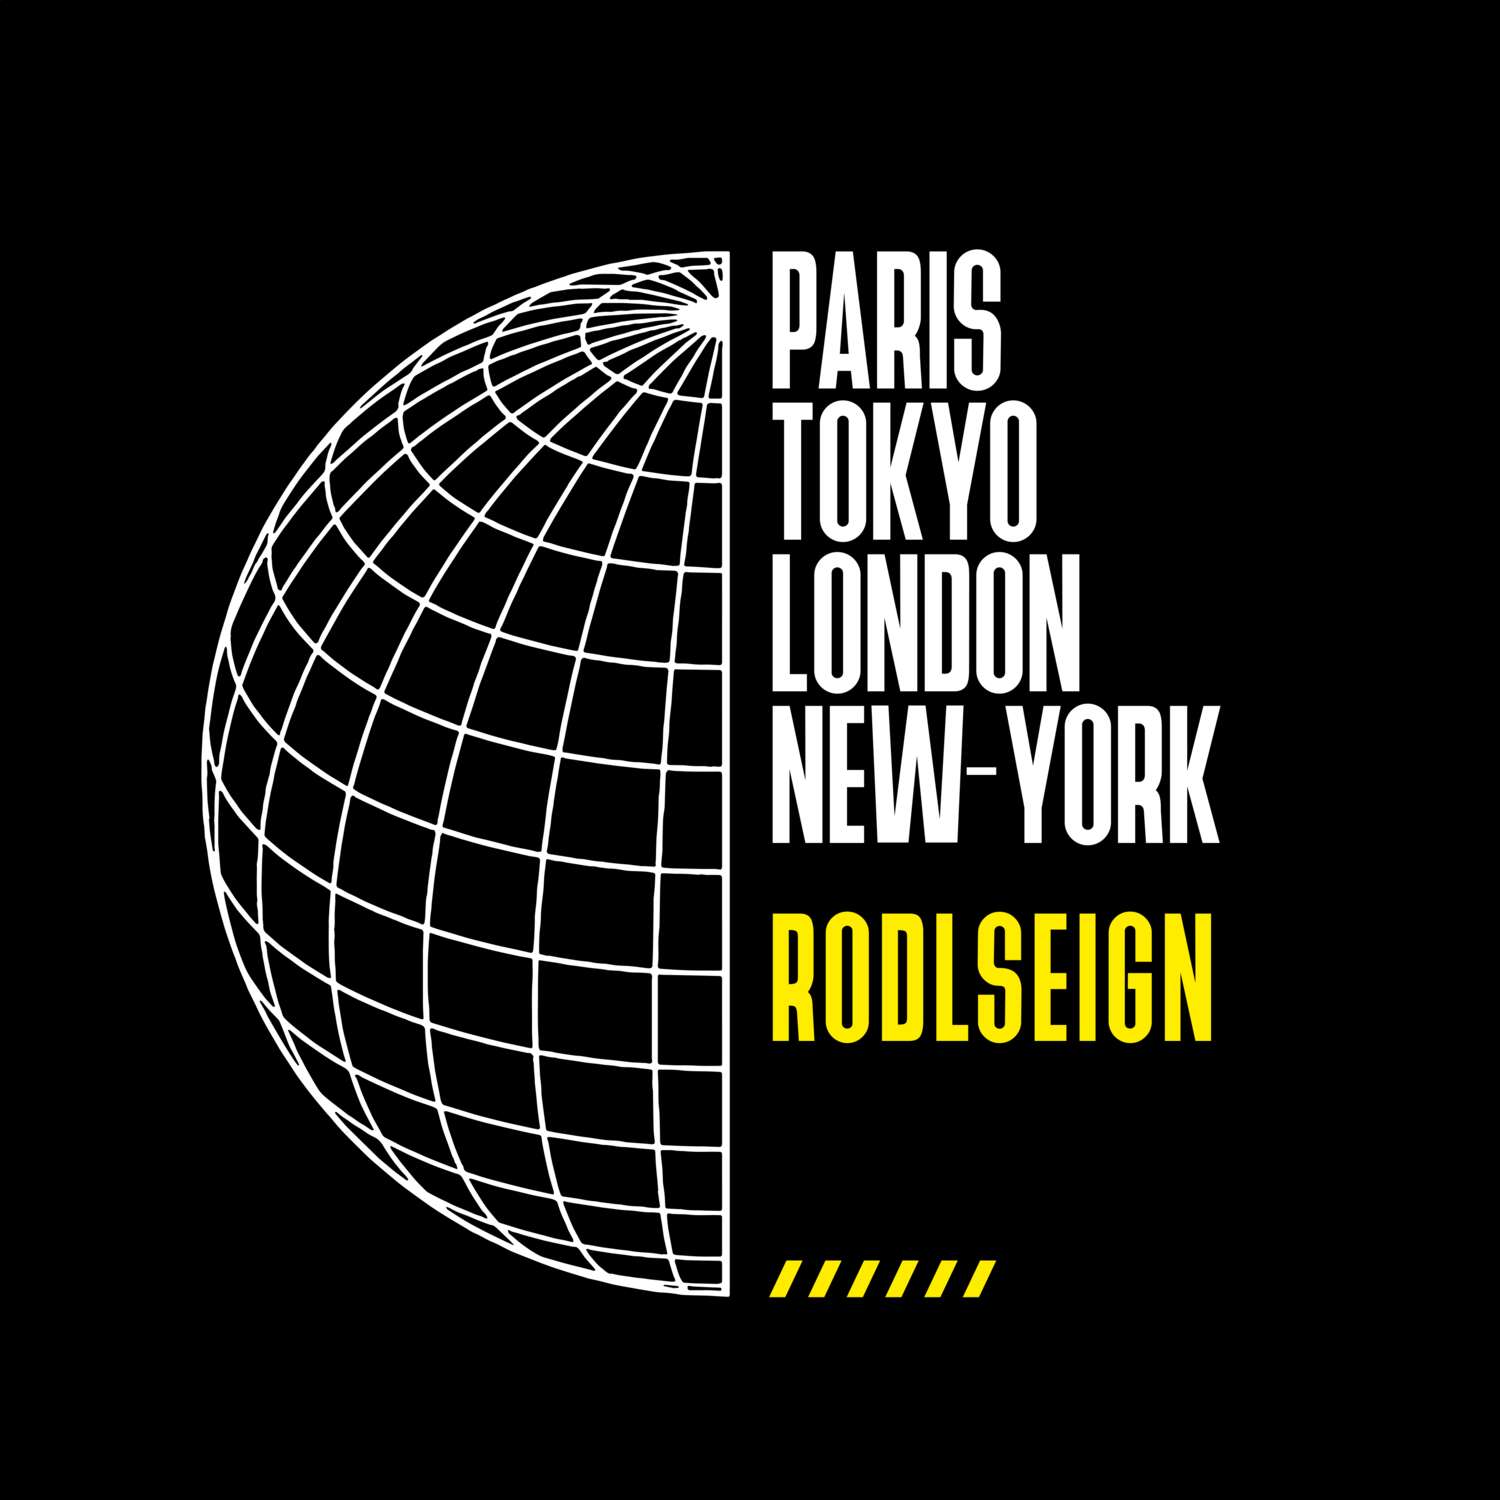 Rodlseign T-Shirt »Paris Tokyo London«